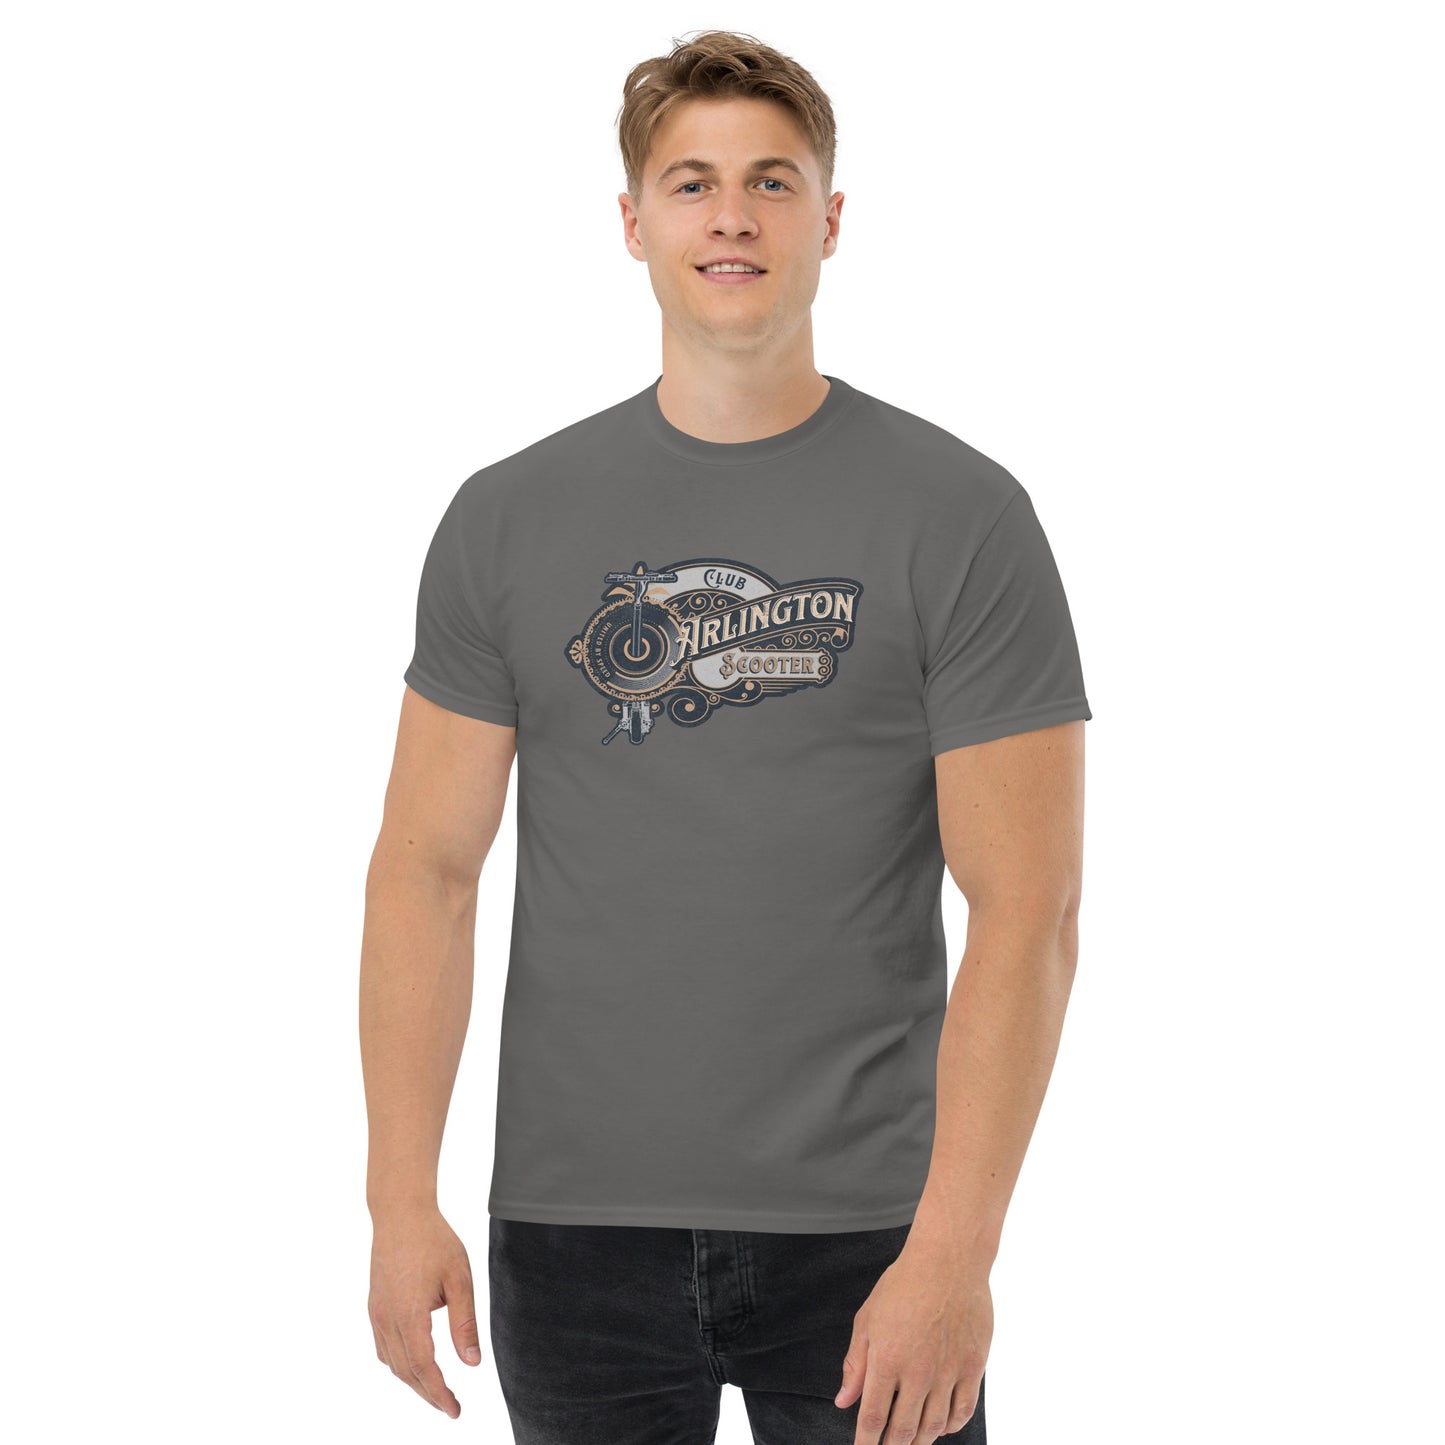 Arlington Scooter Club t-shirt